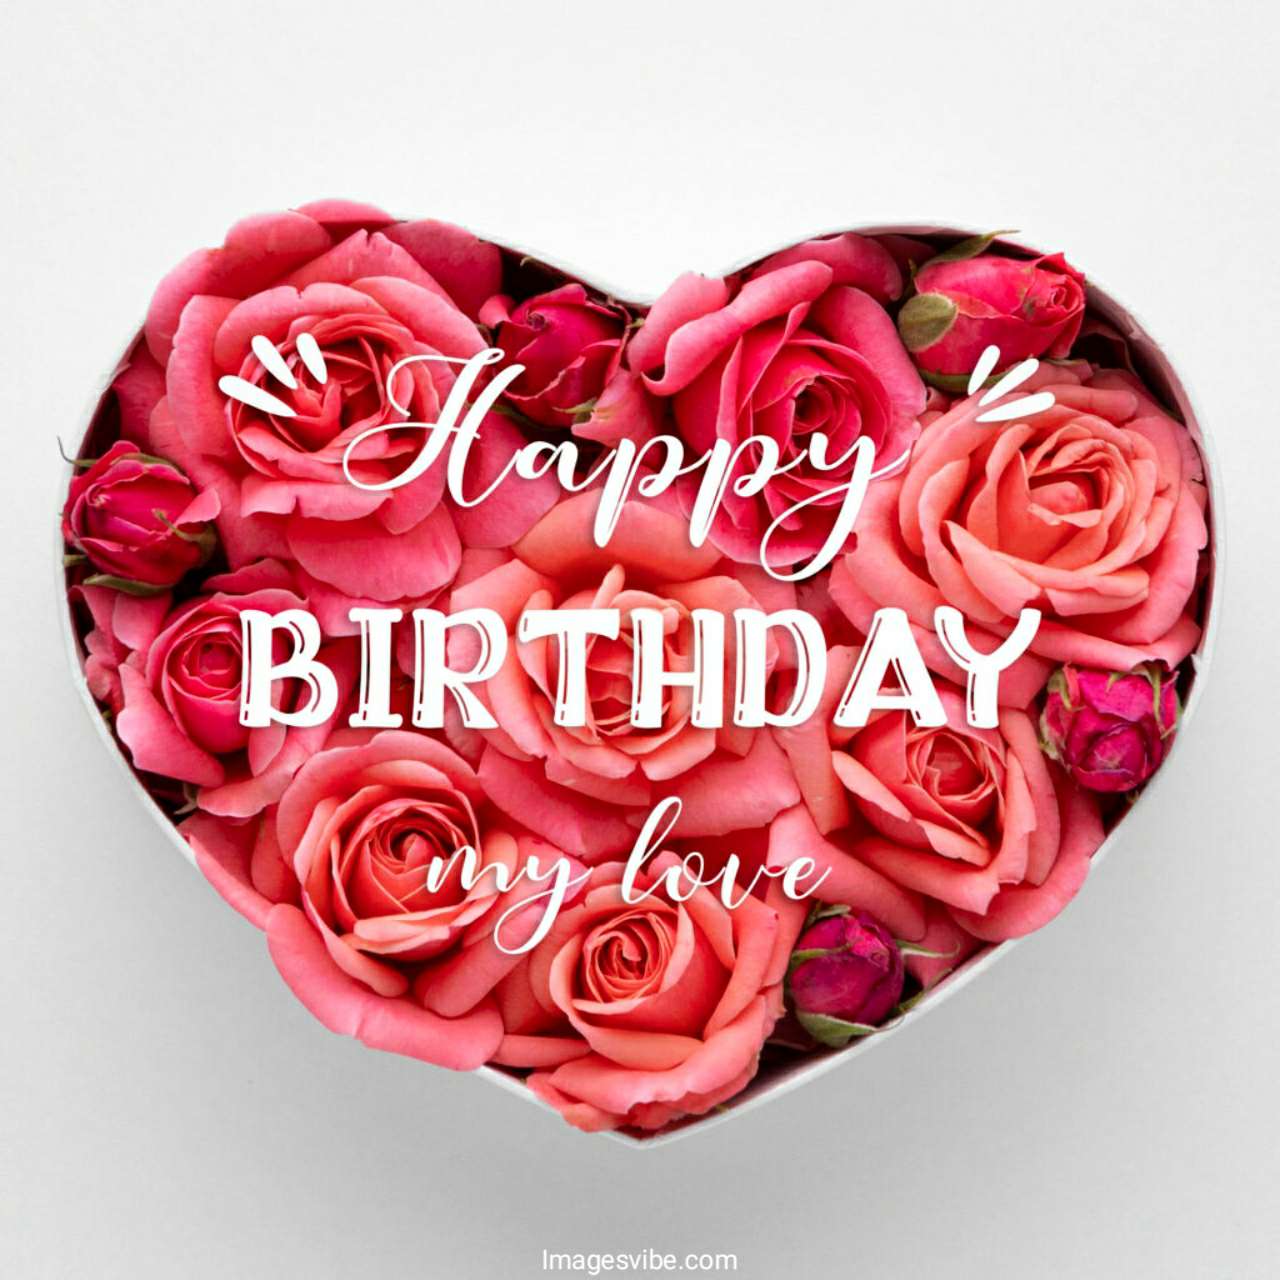 Top 999+ happy birthday love images download – Amazing Collection happy birthday love images download Full 4K